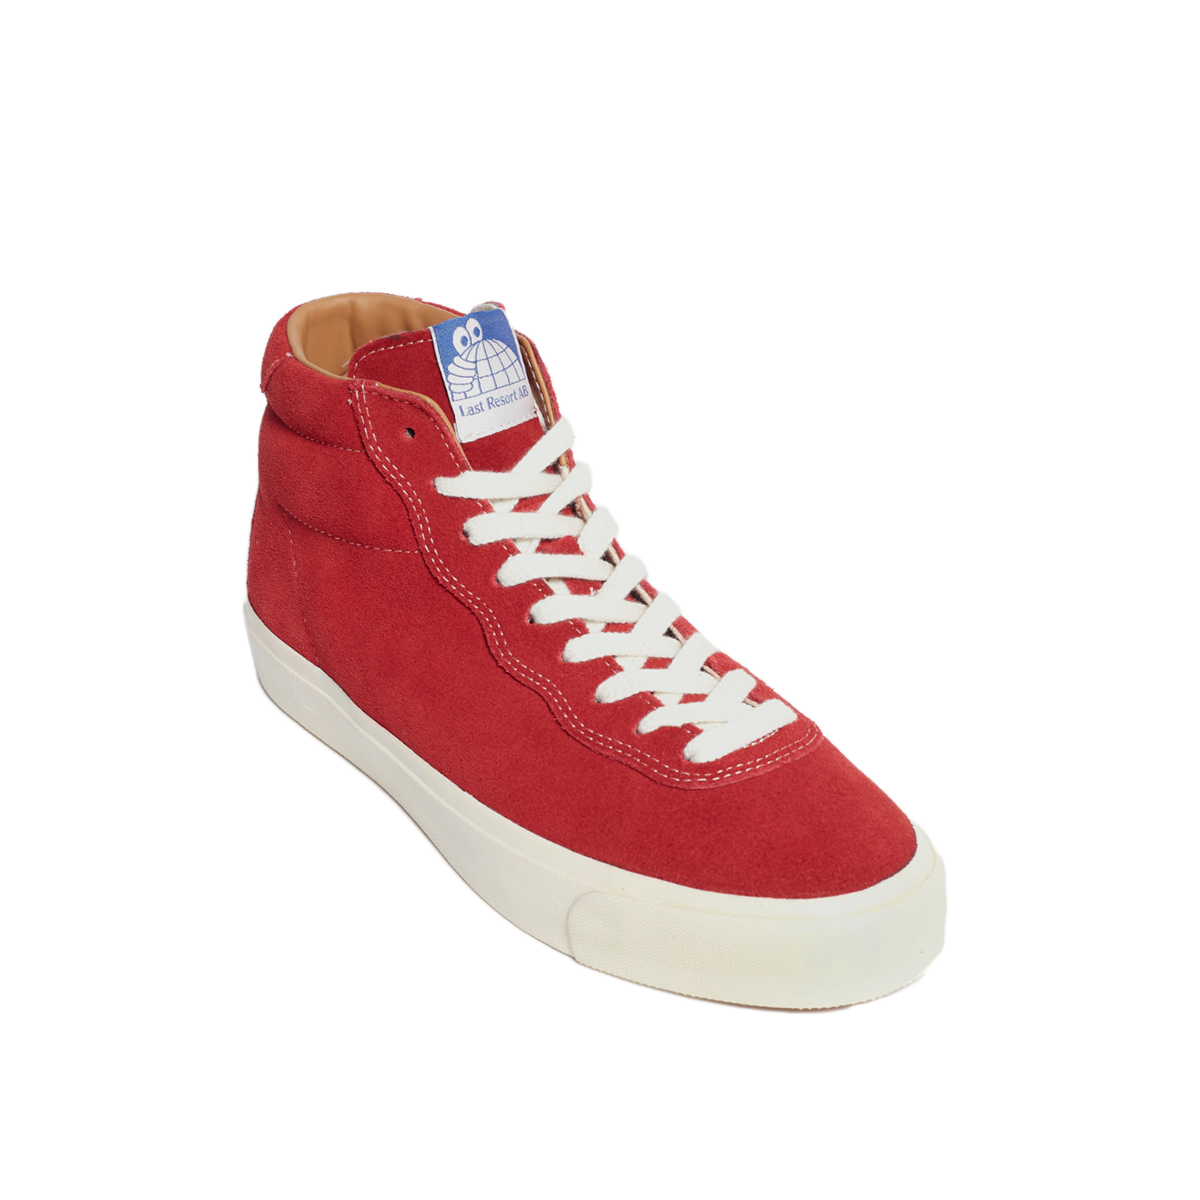 Last Resort AB VM001 Suede Hi Shoes - Old Red/White